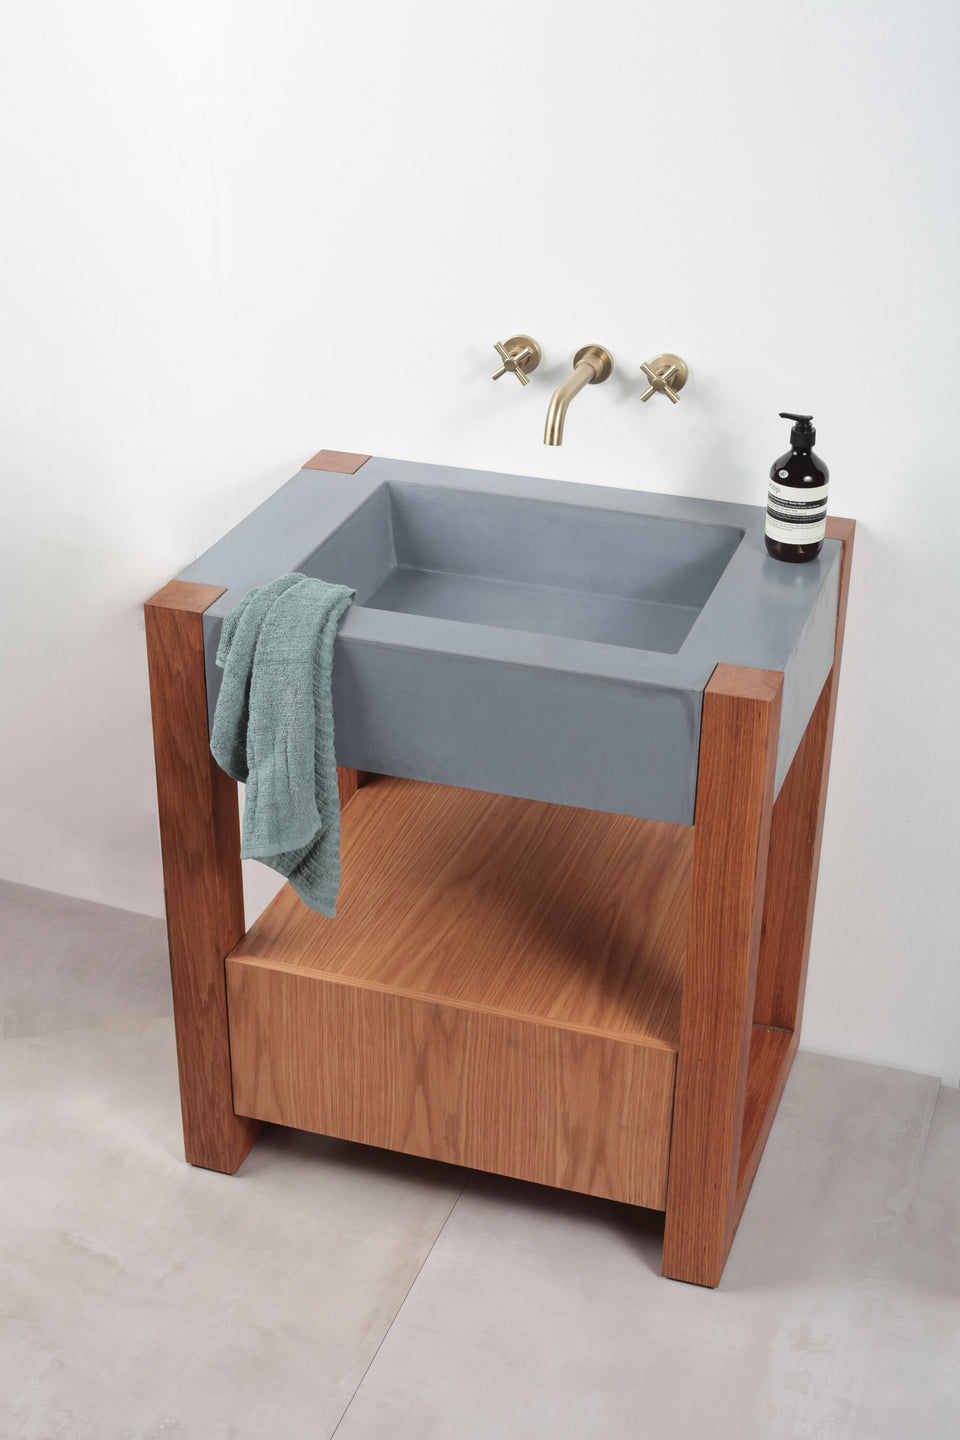 Plus Design Concrete Sink with Vanity